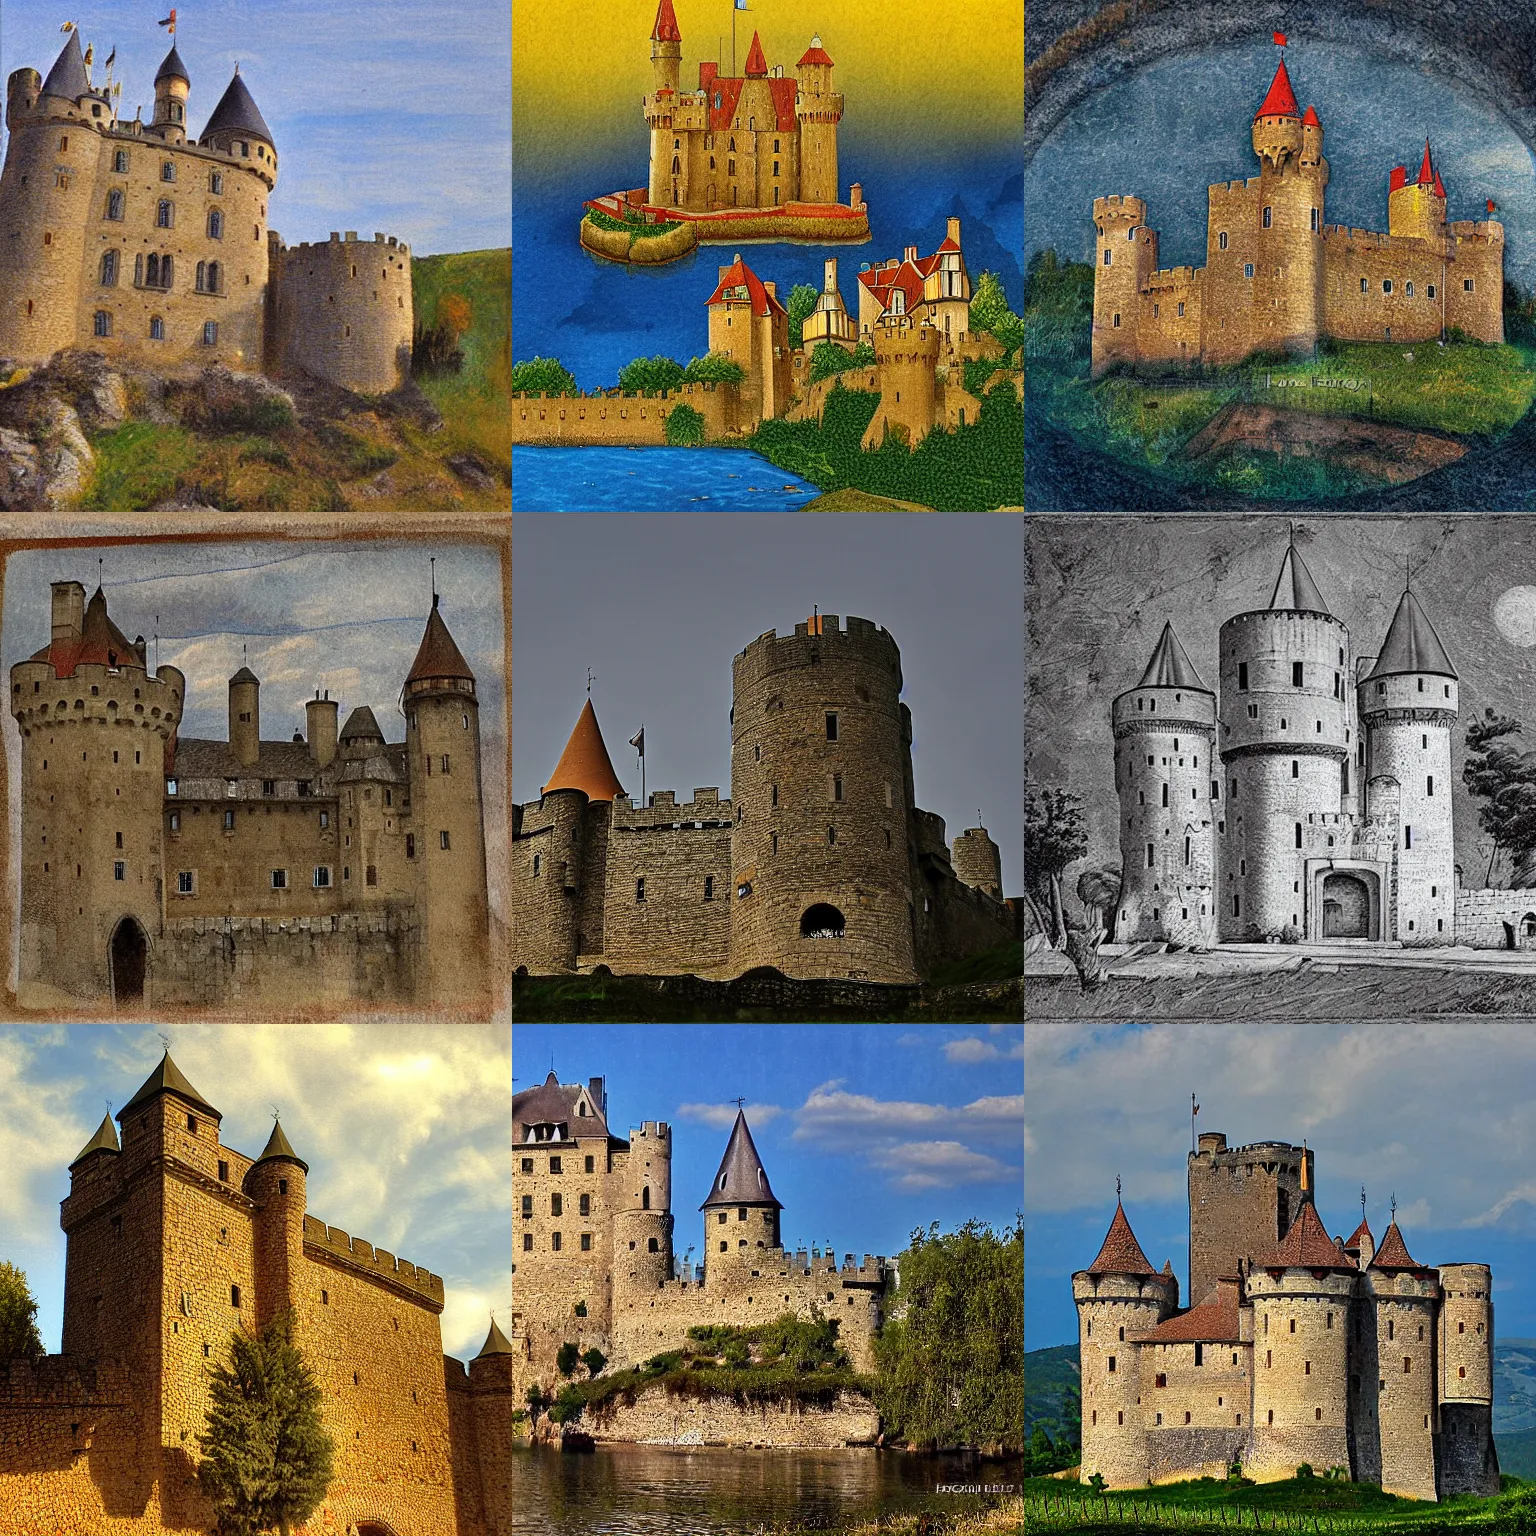 Prompt: medieval castle, by horia bernea